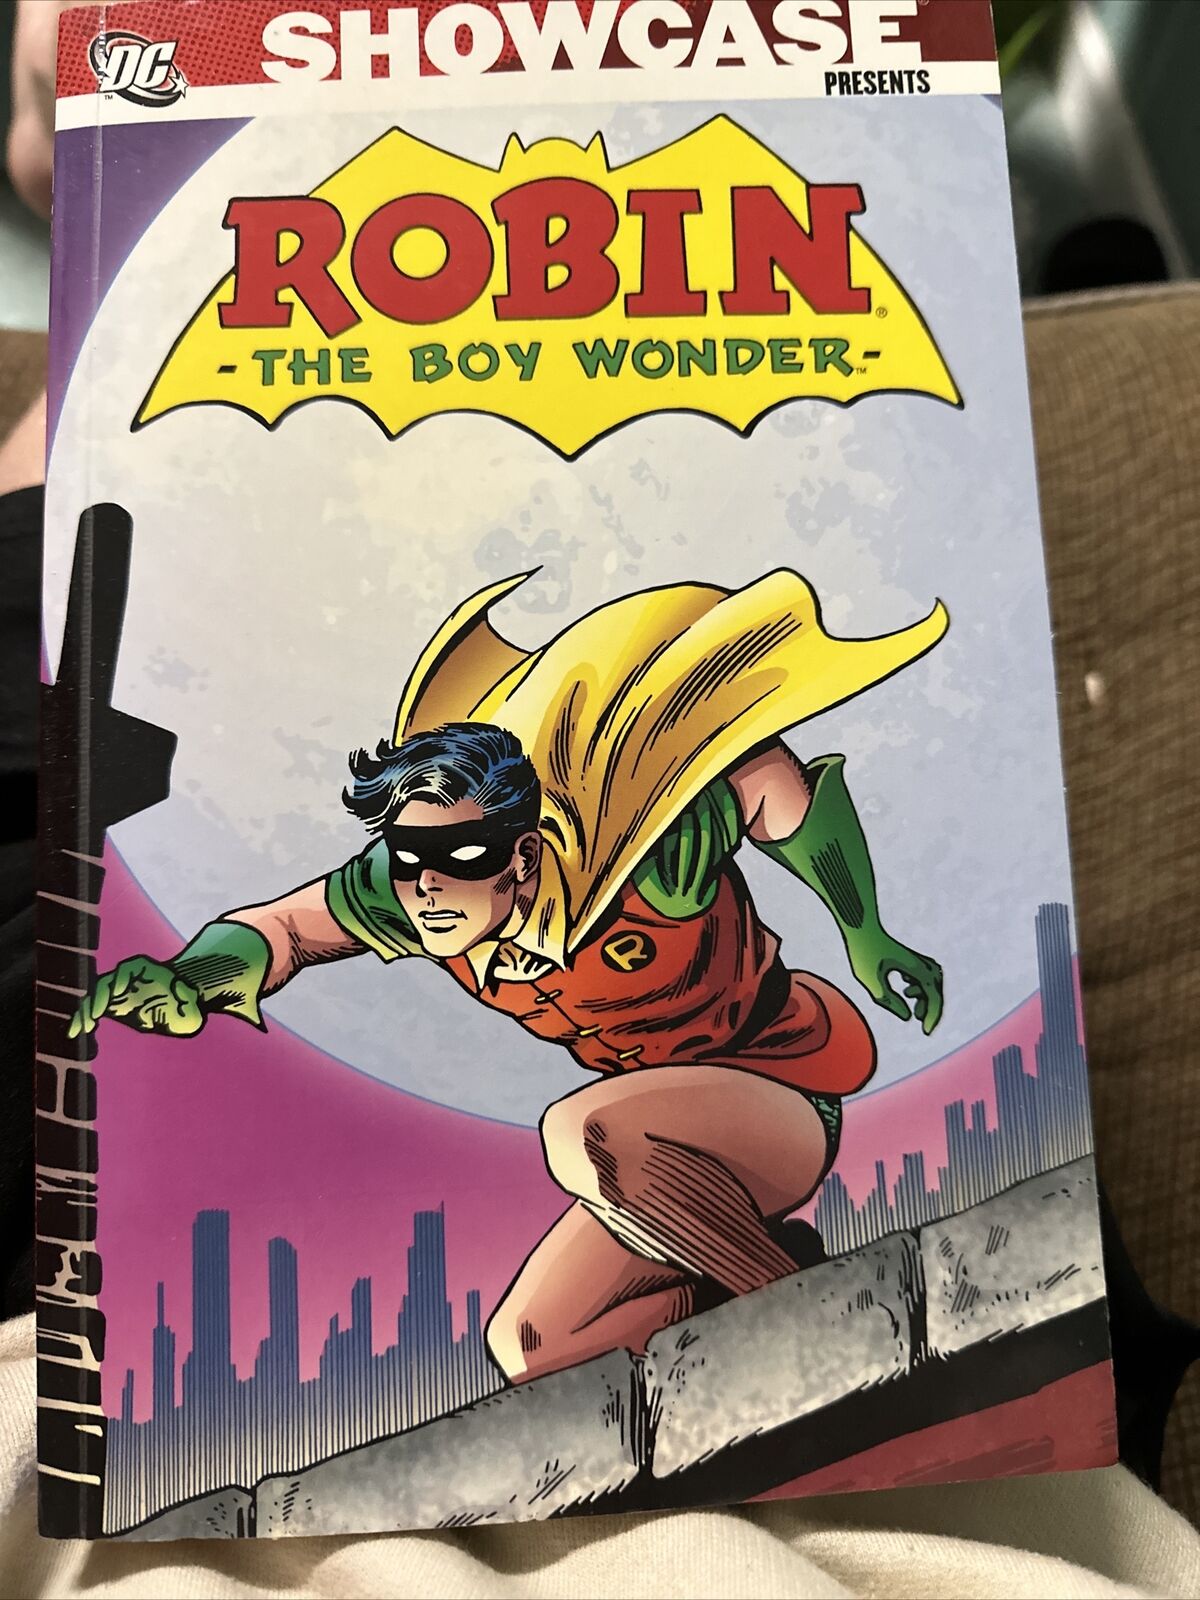 Showcase Presents: Robin the Boy Wonder #1 (DC Comics, March 2008)